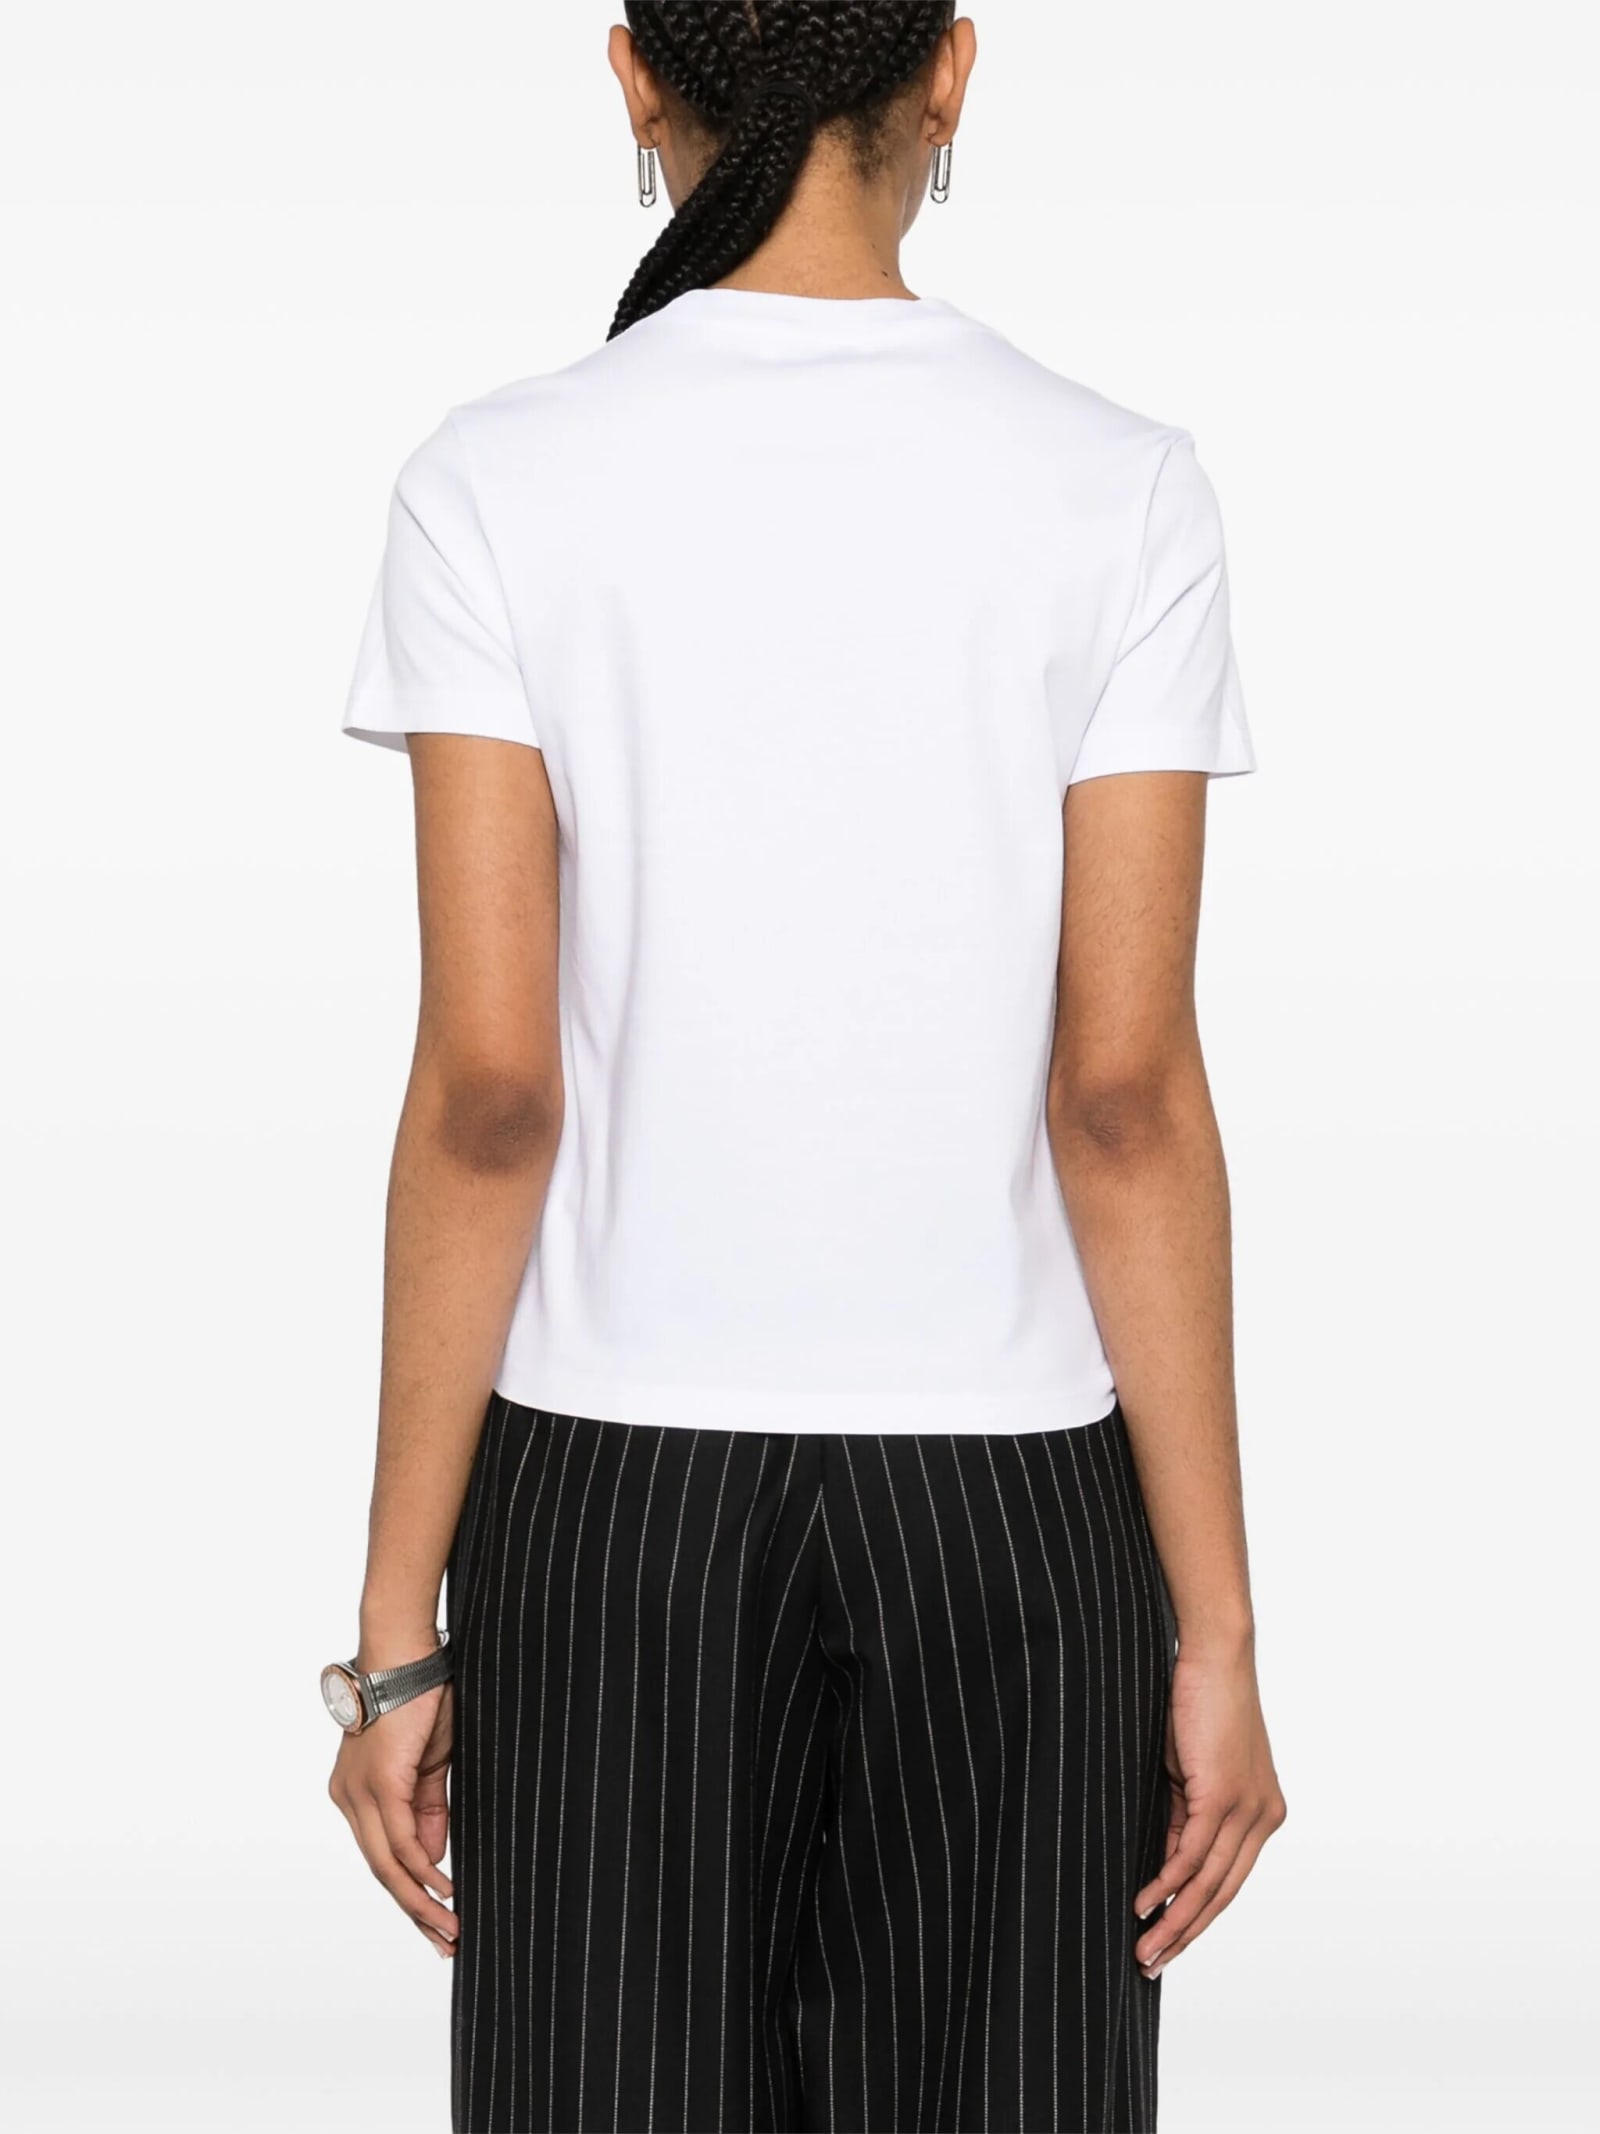 Shop Lanvin Tshirt In Optic White